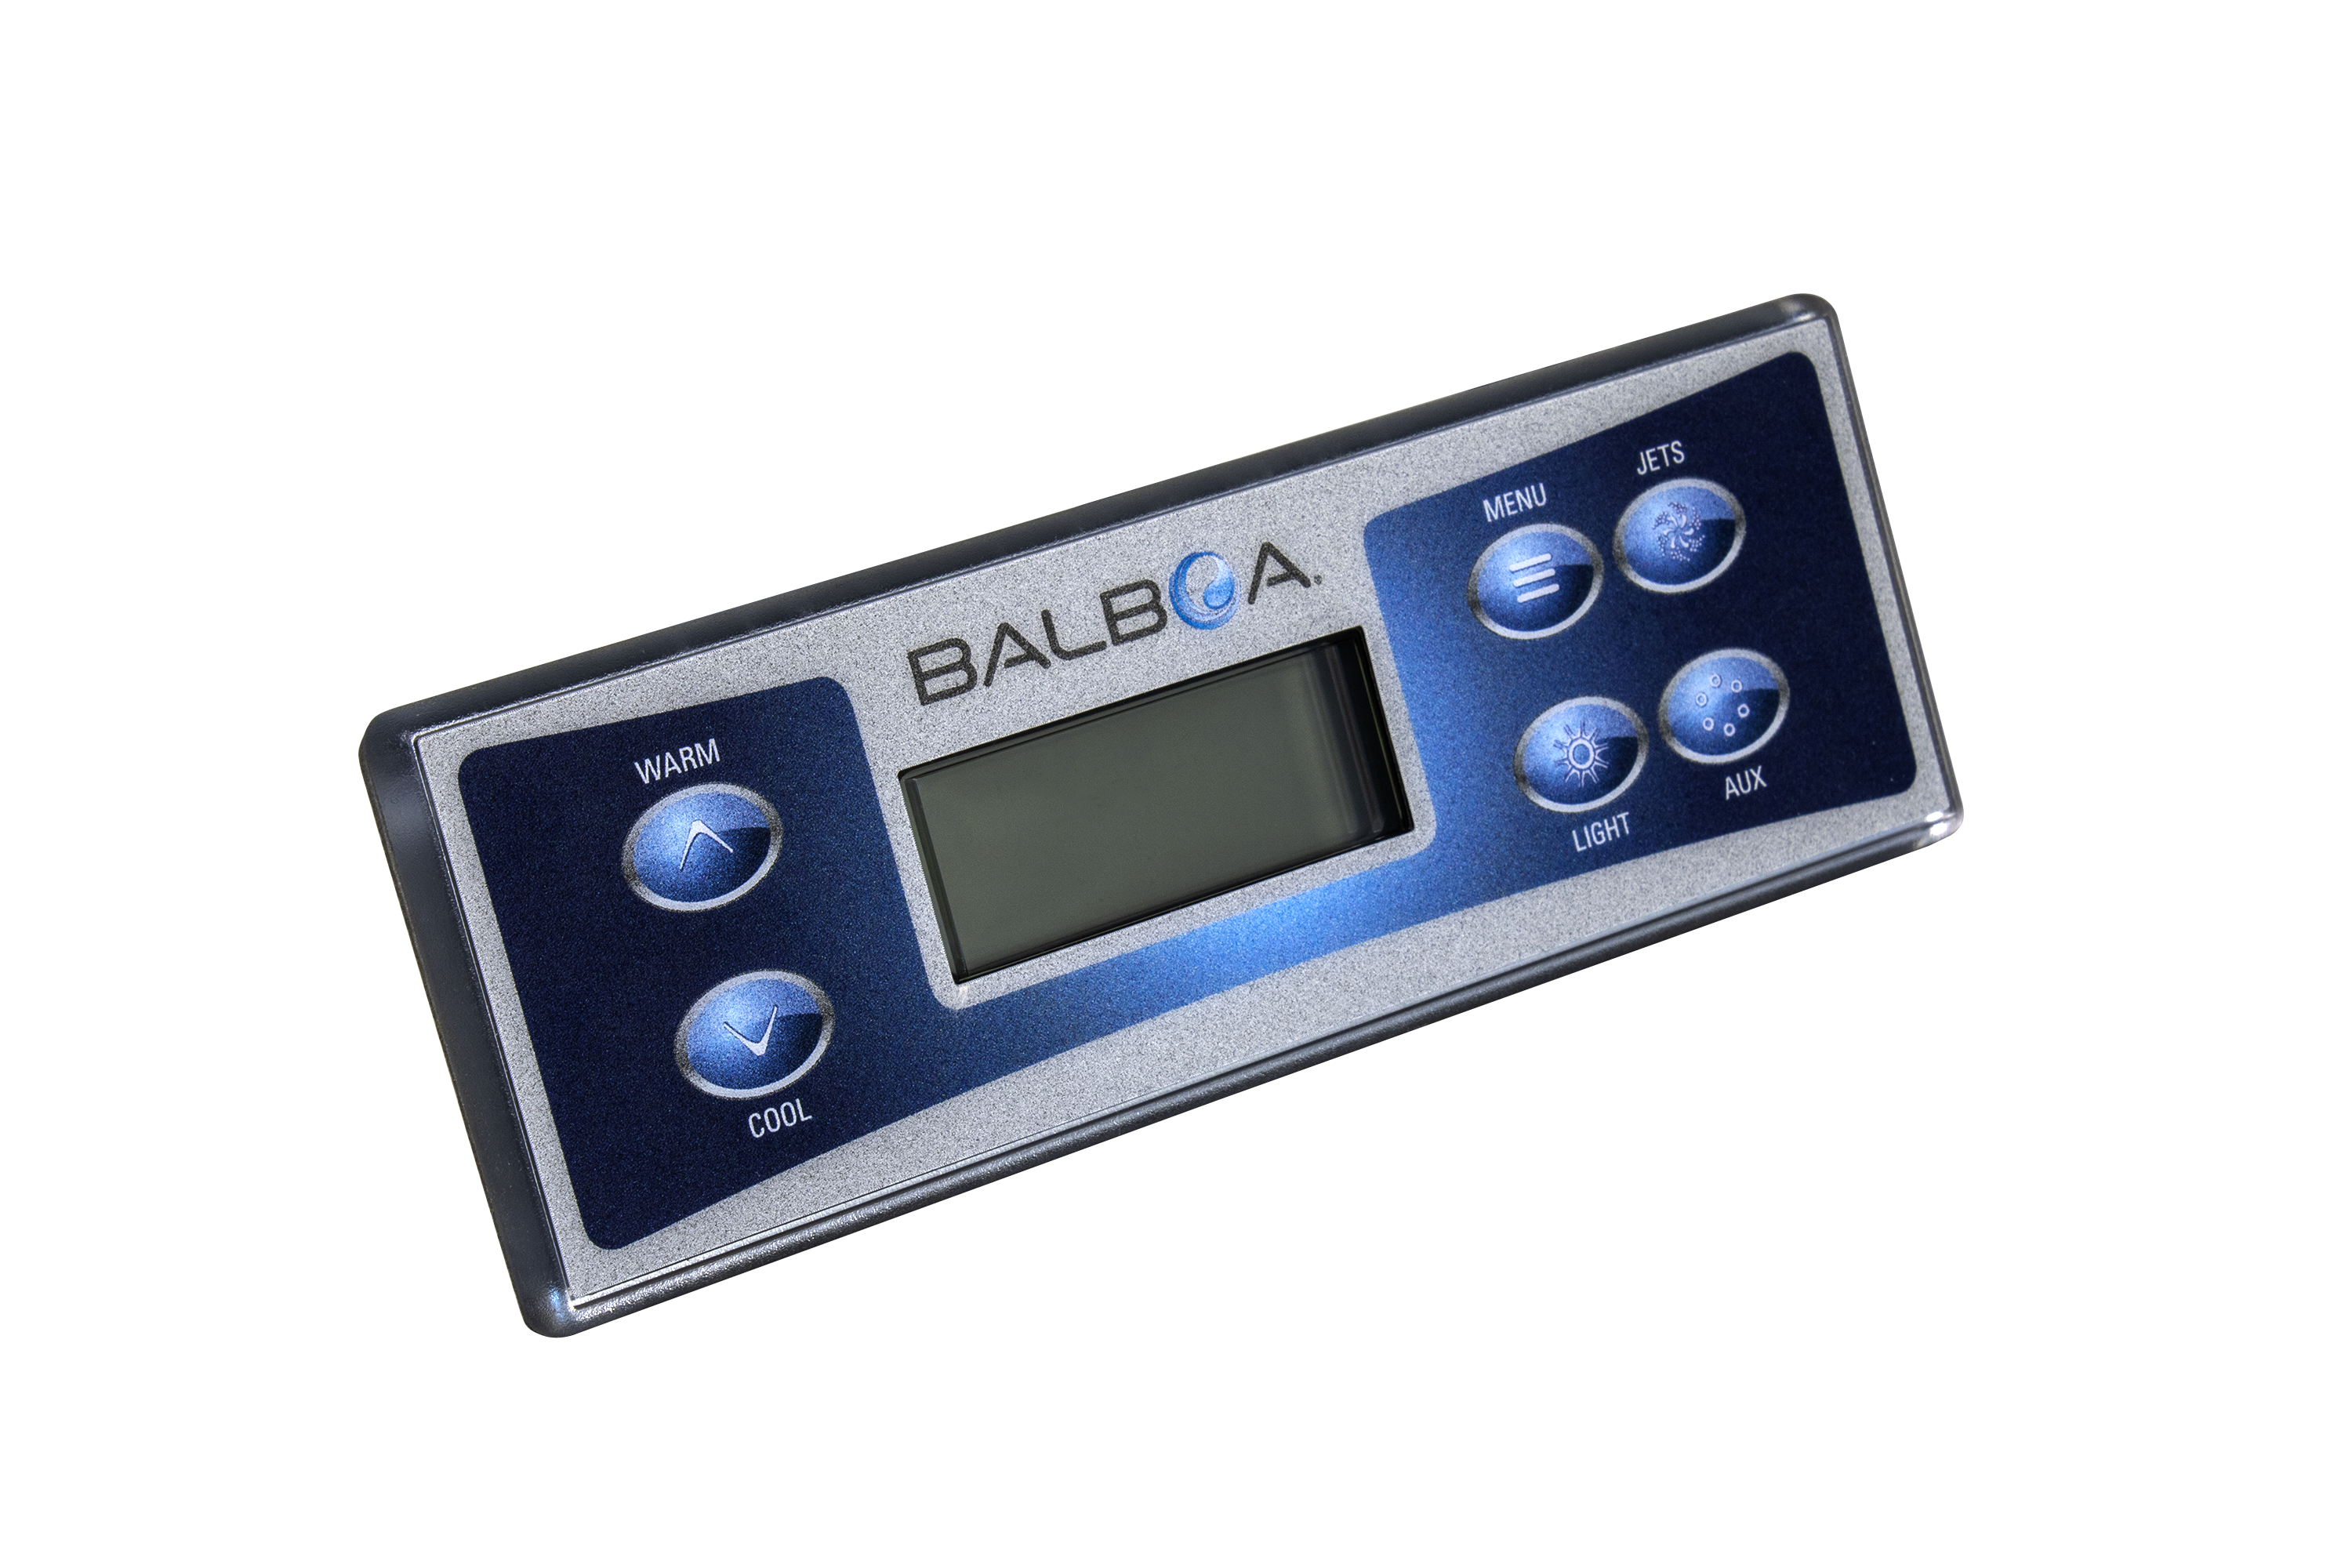 Balboa TP500 LCD 6-Button Panel PN 57237-01